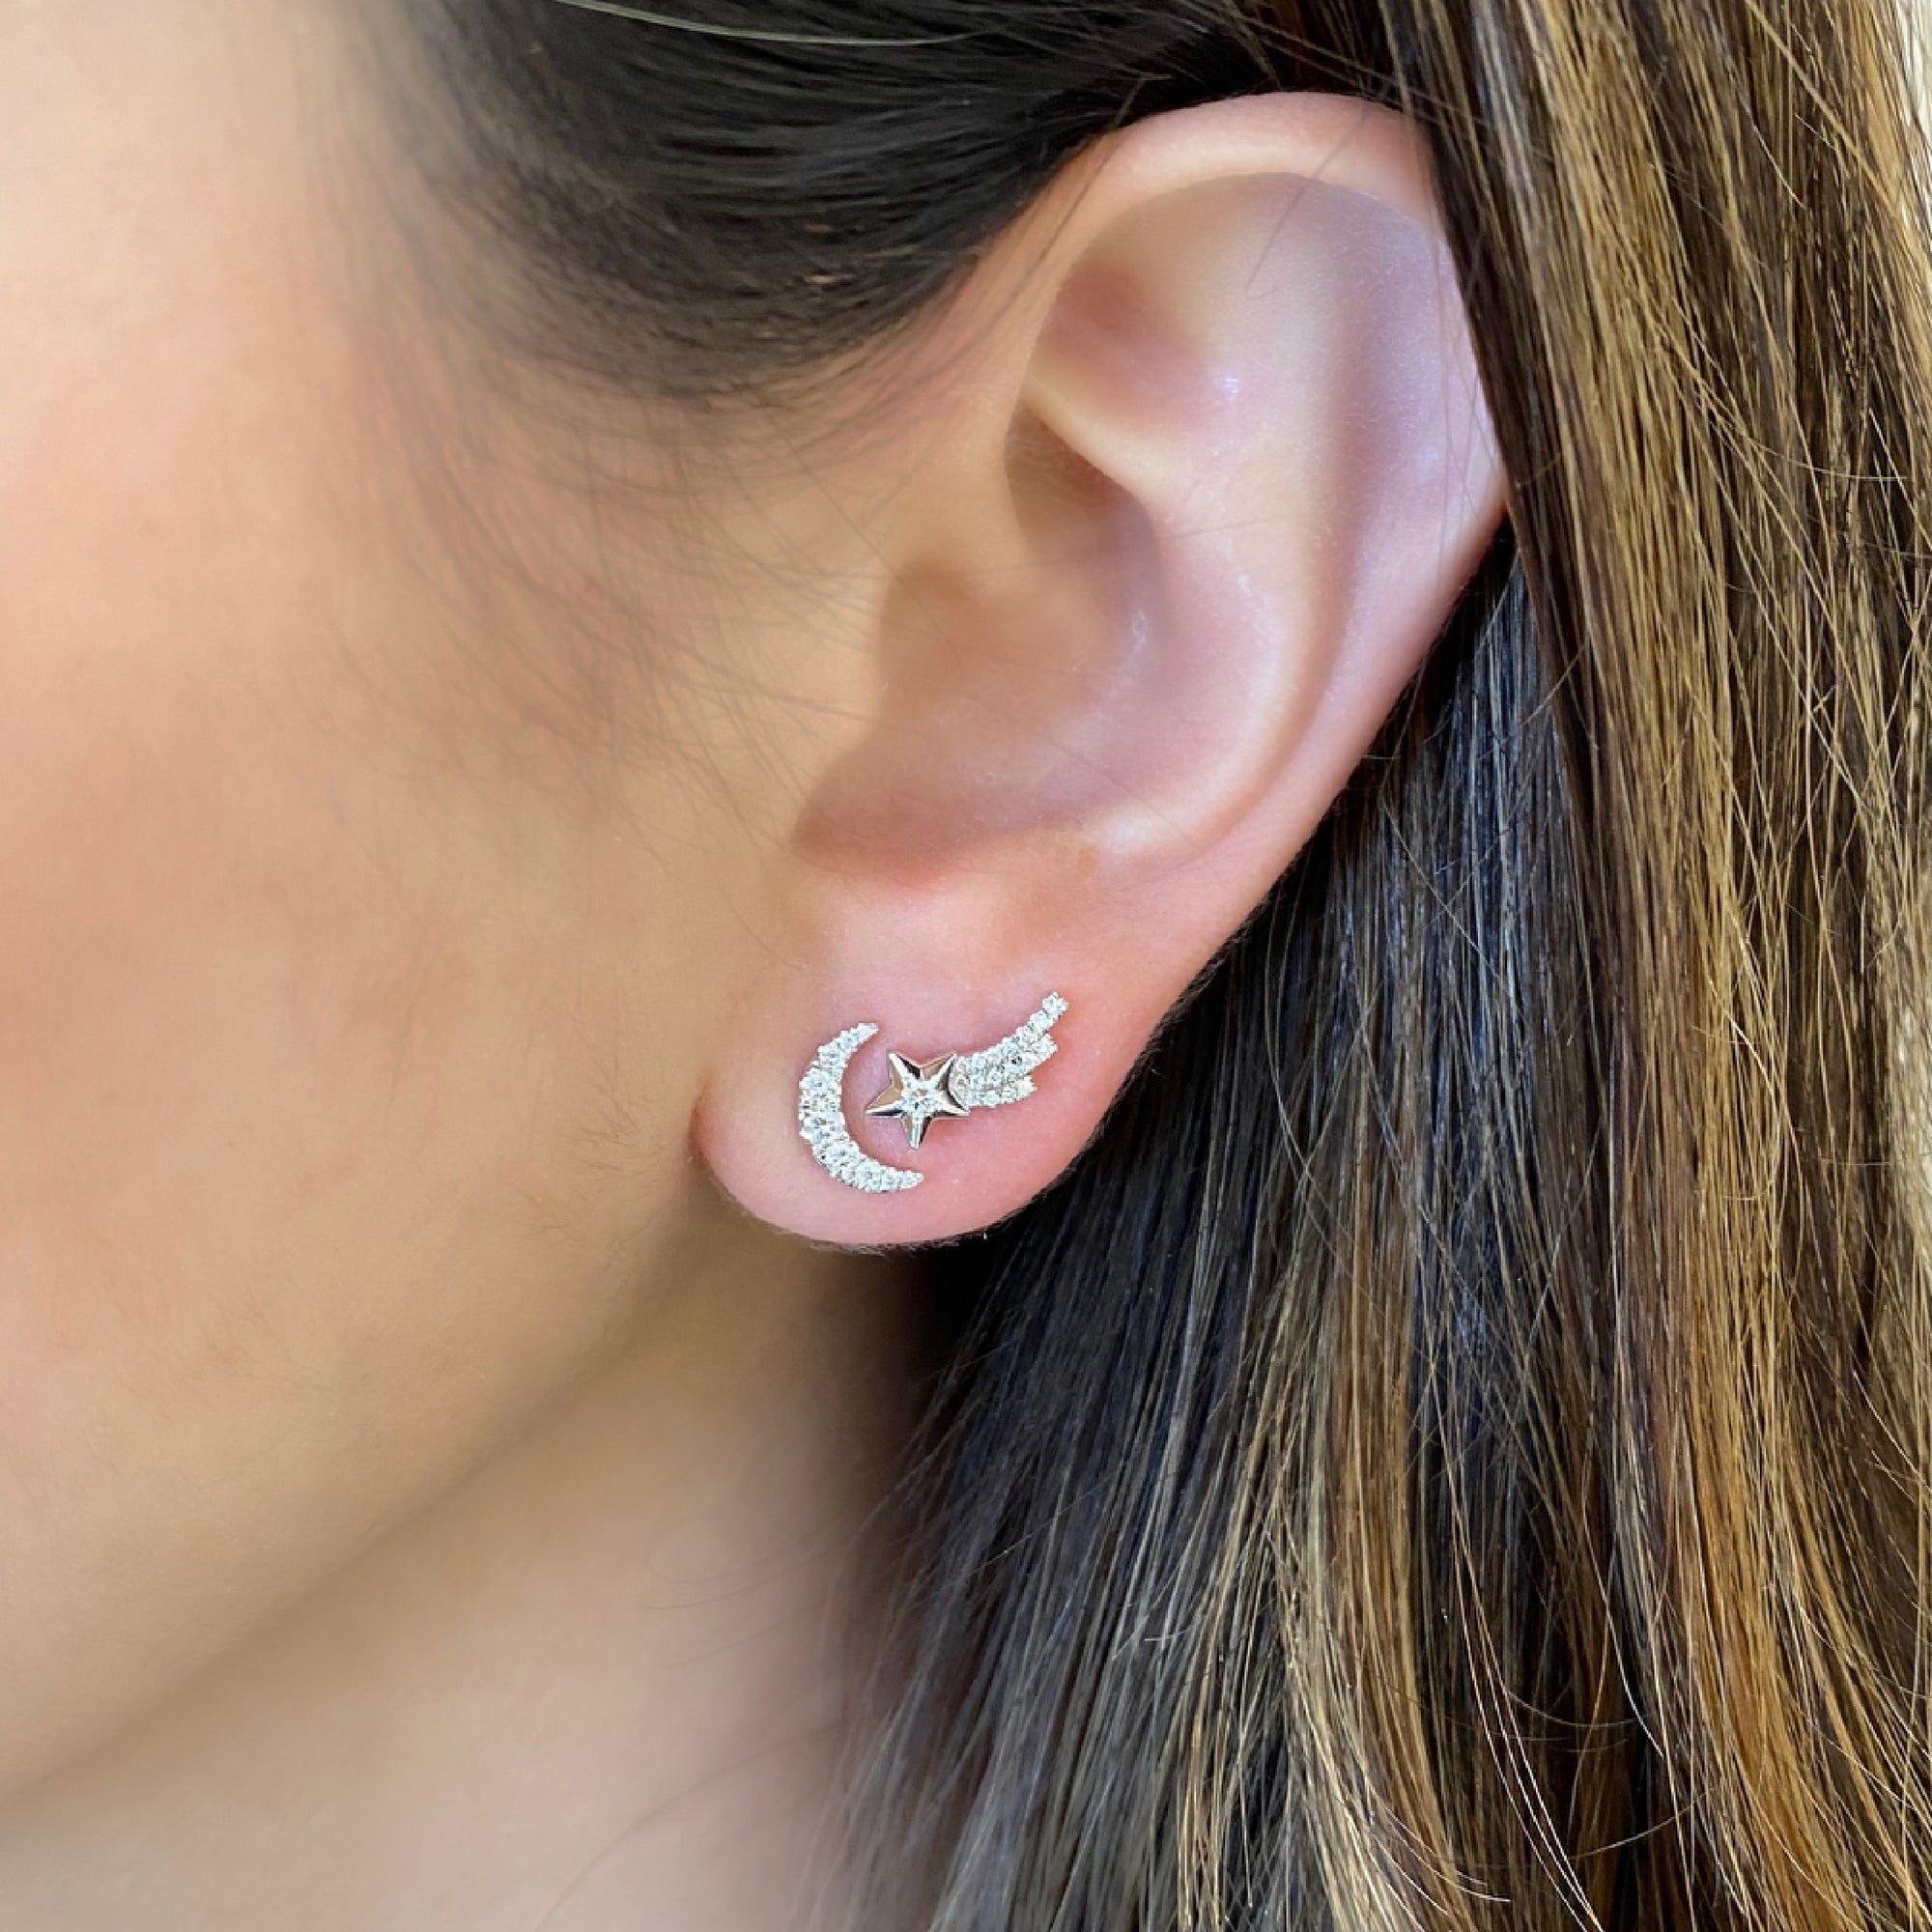 Celestial Diamond Stud Earrings -14K white gold weighing 1.39 grams -27 round diamonds weighing 0.18 carats